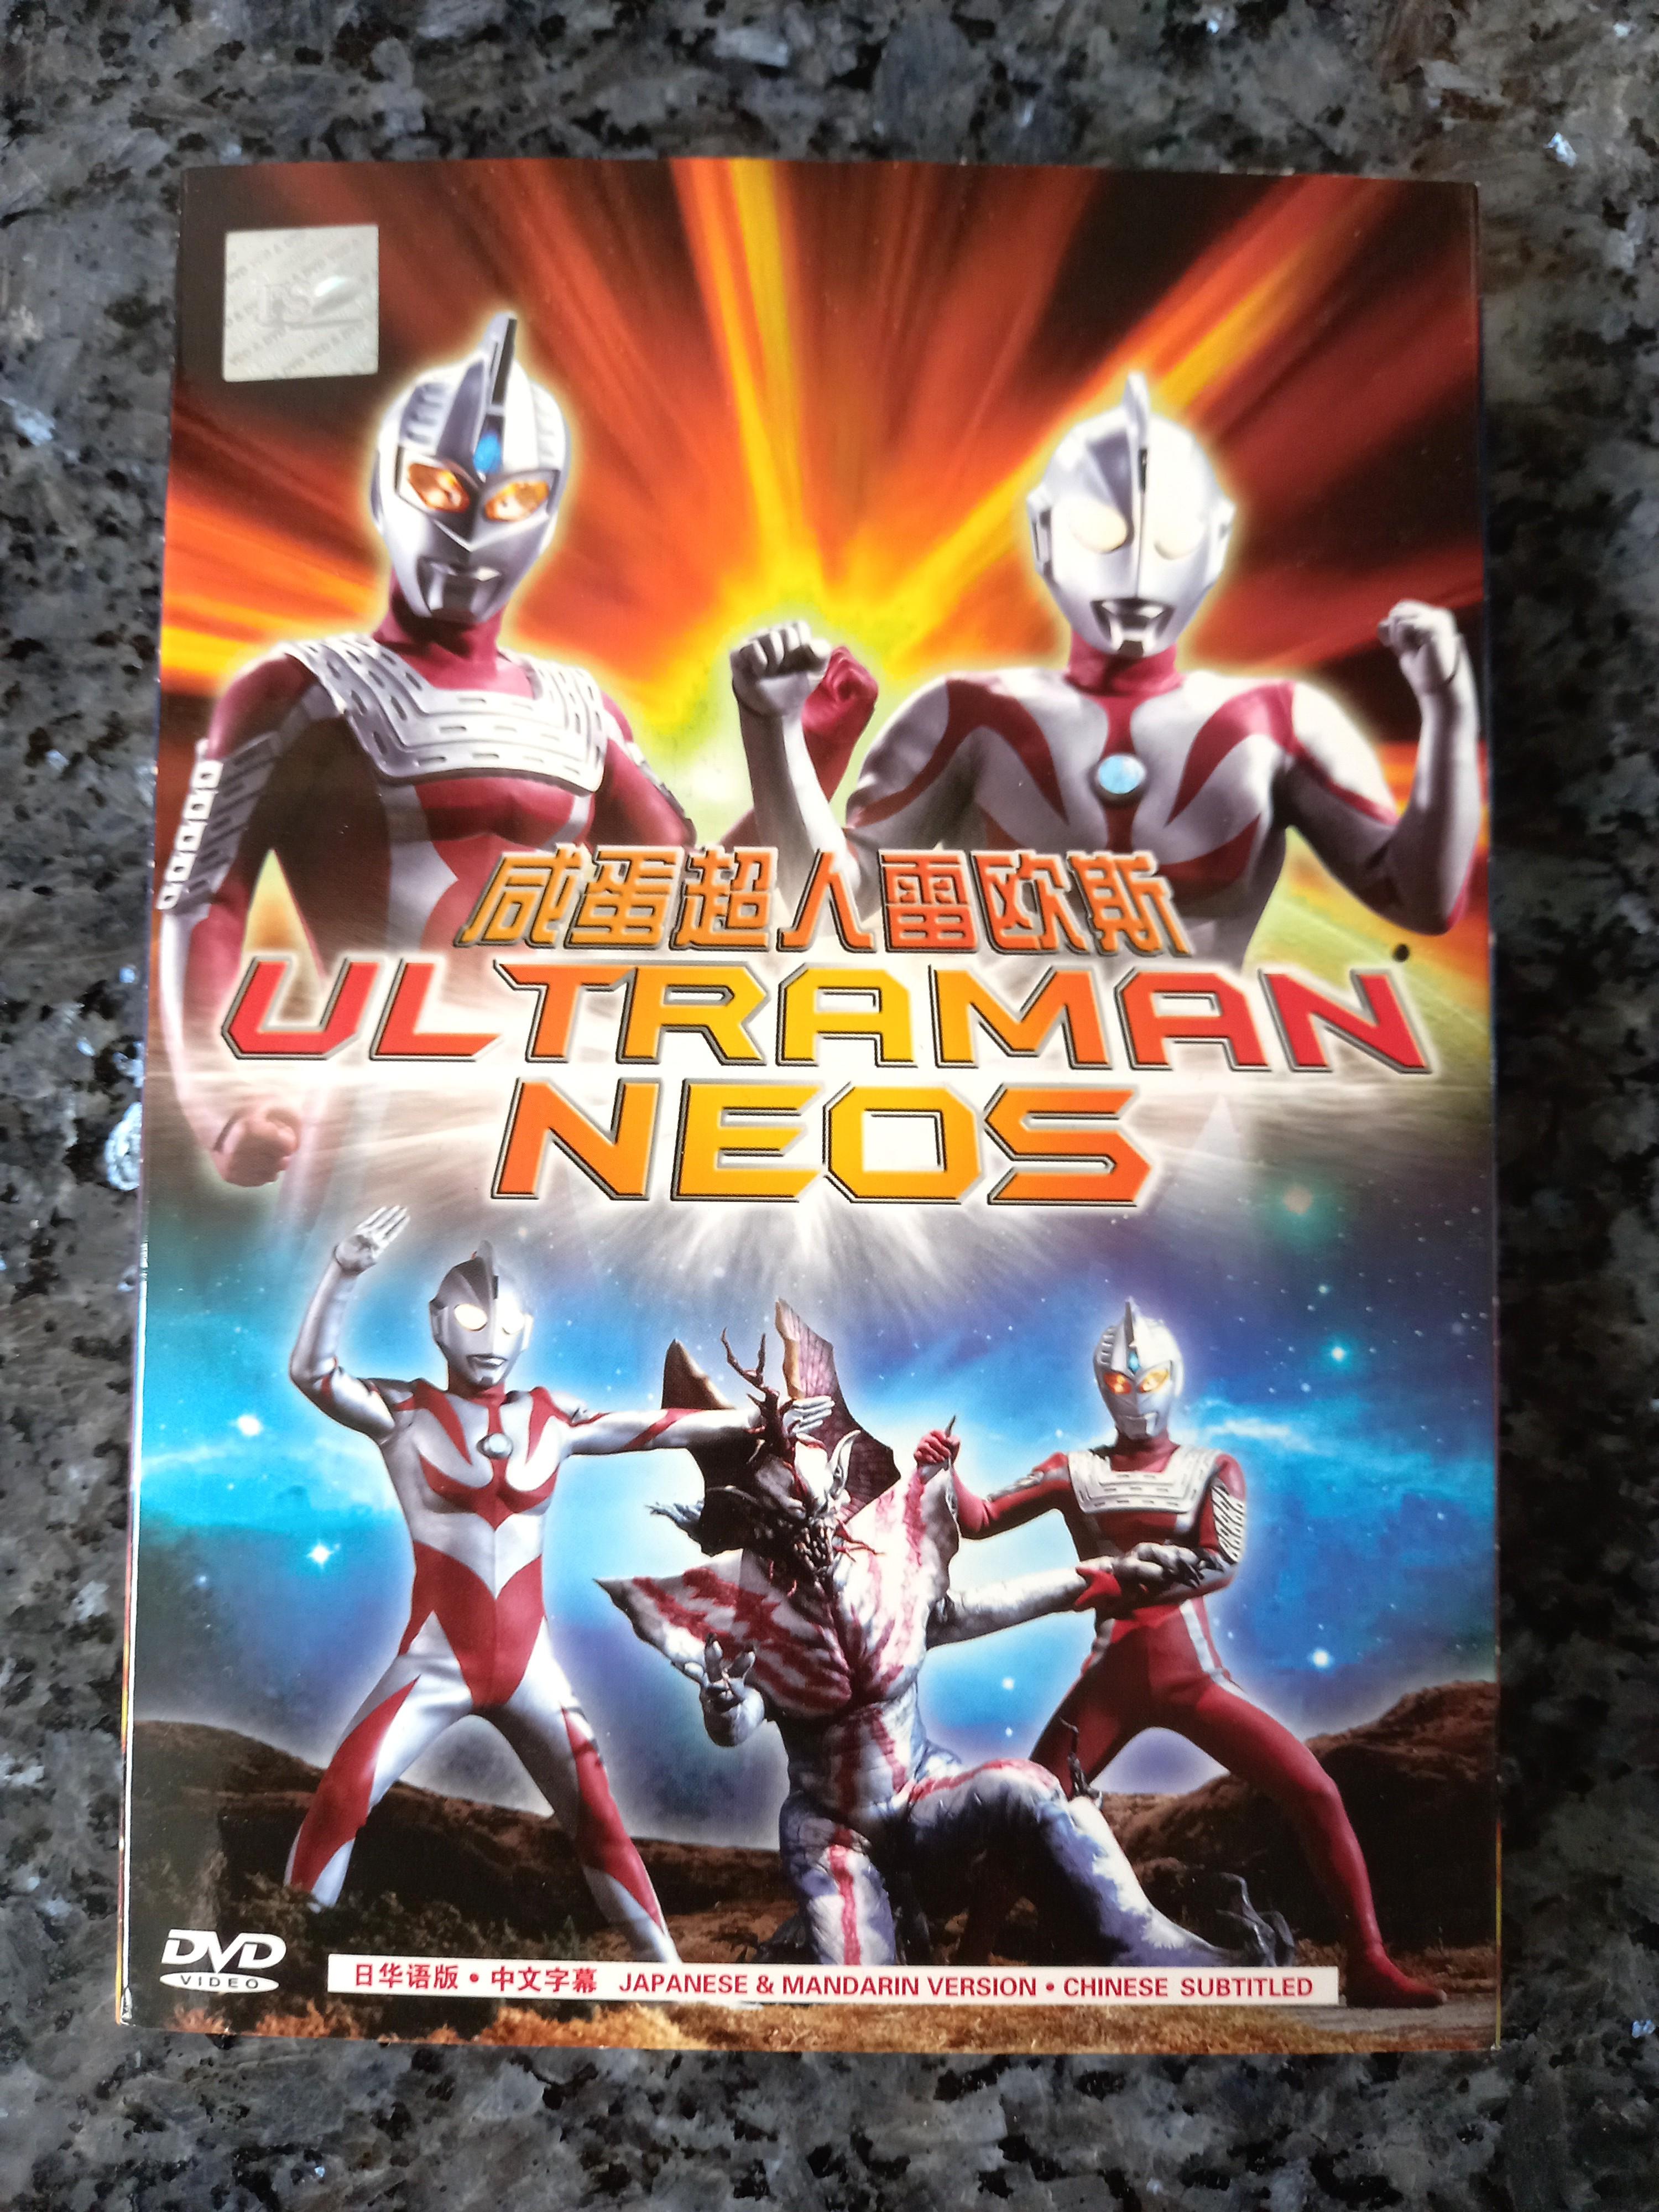 Ultraman neos